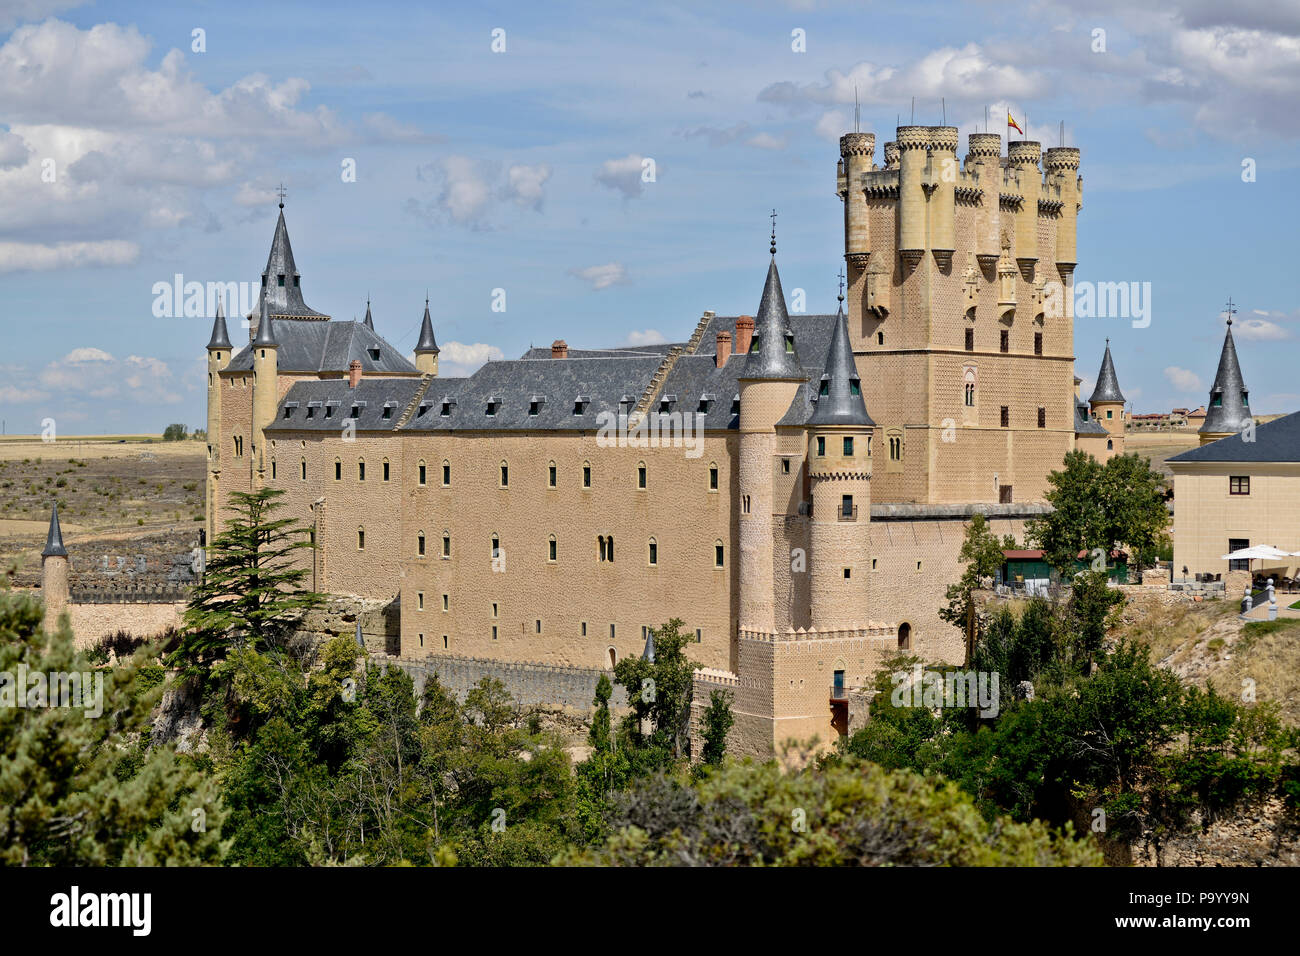 Tower of John II of Castile - Alcazar of Segovia, Spain Stock Photo